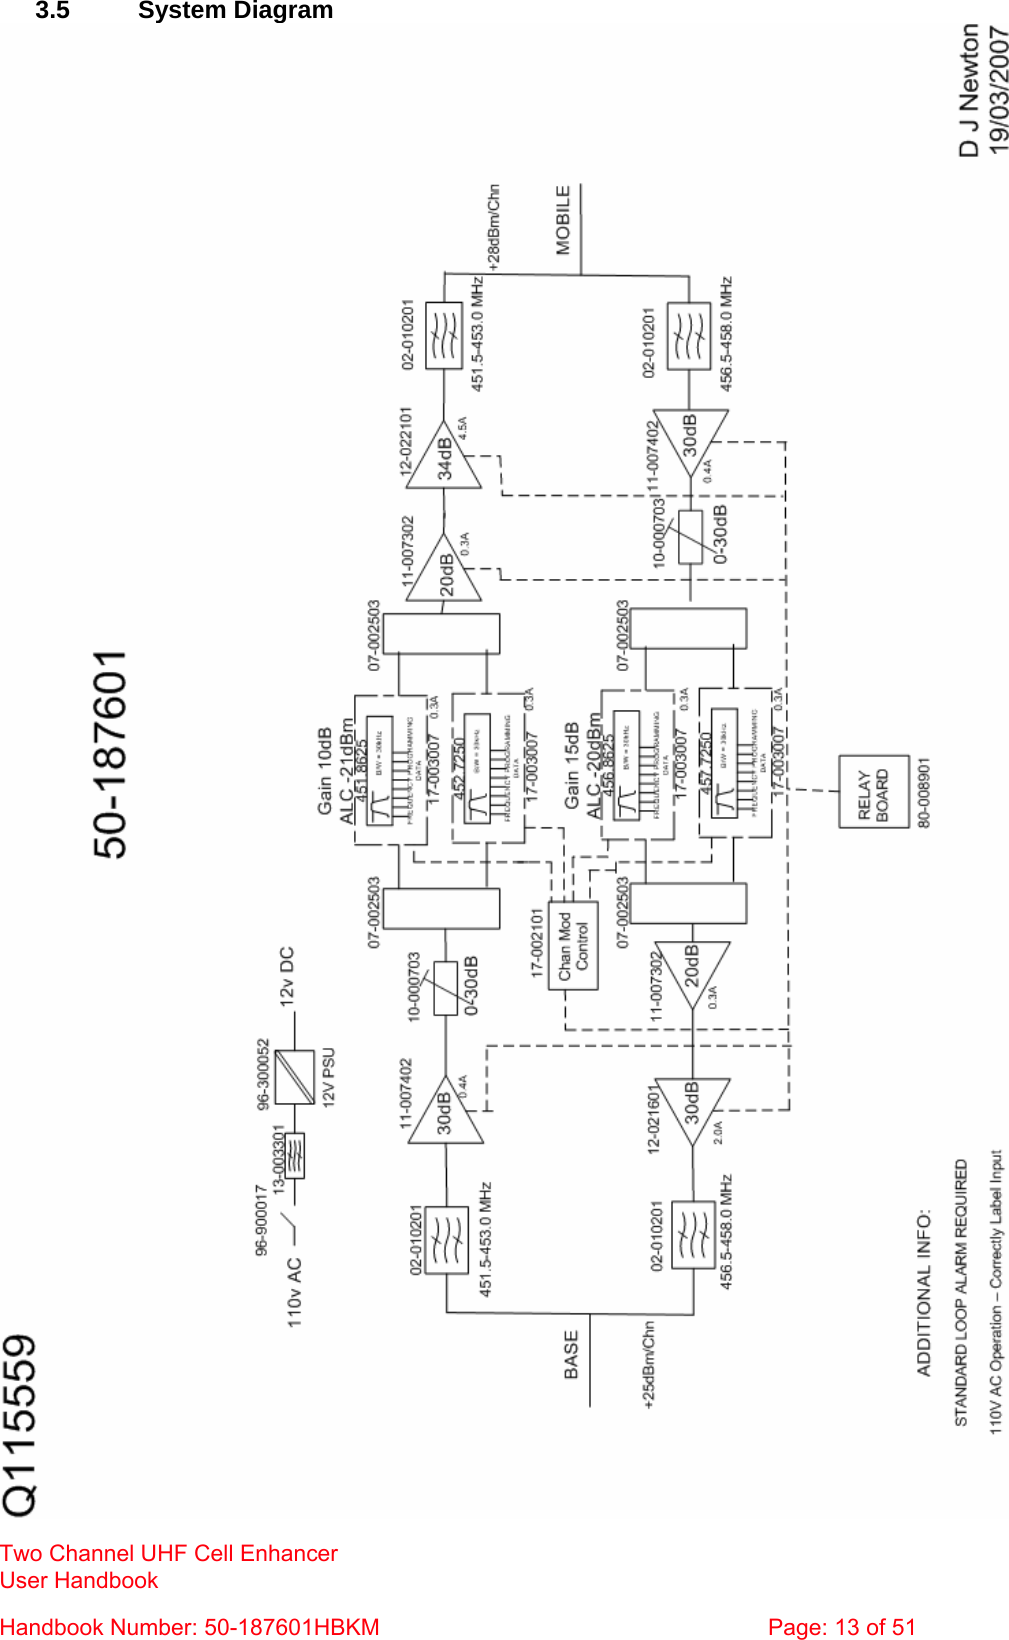 3.5 System Diagram  Two Channel UHF Cell Enhancer User Handbook Handbook Number: 50-187601HBKM  Page: 13 of 51  